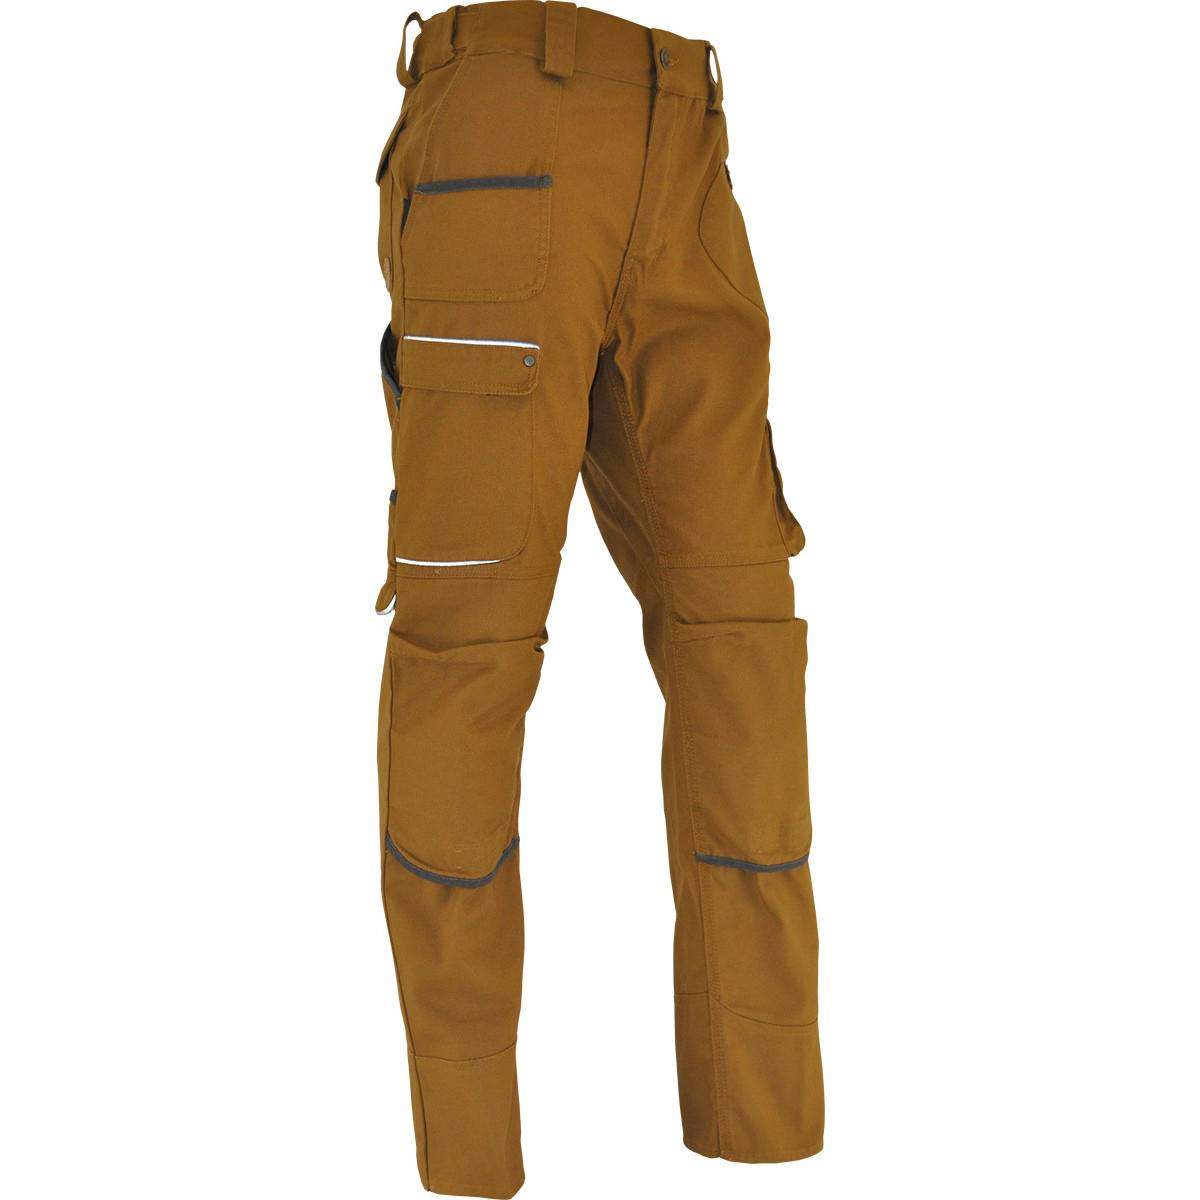 SAHARA work trousers size 48, bronze